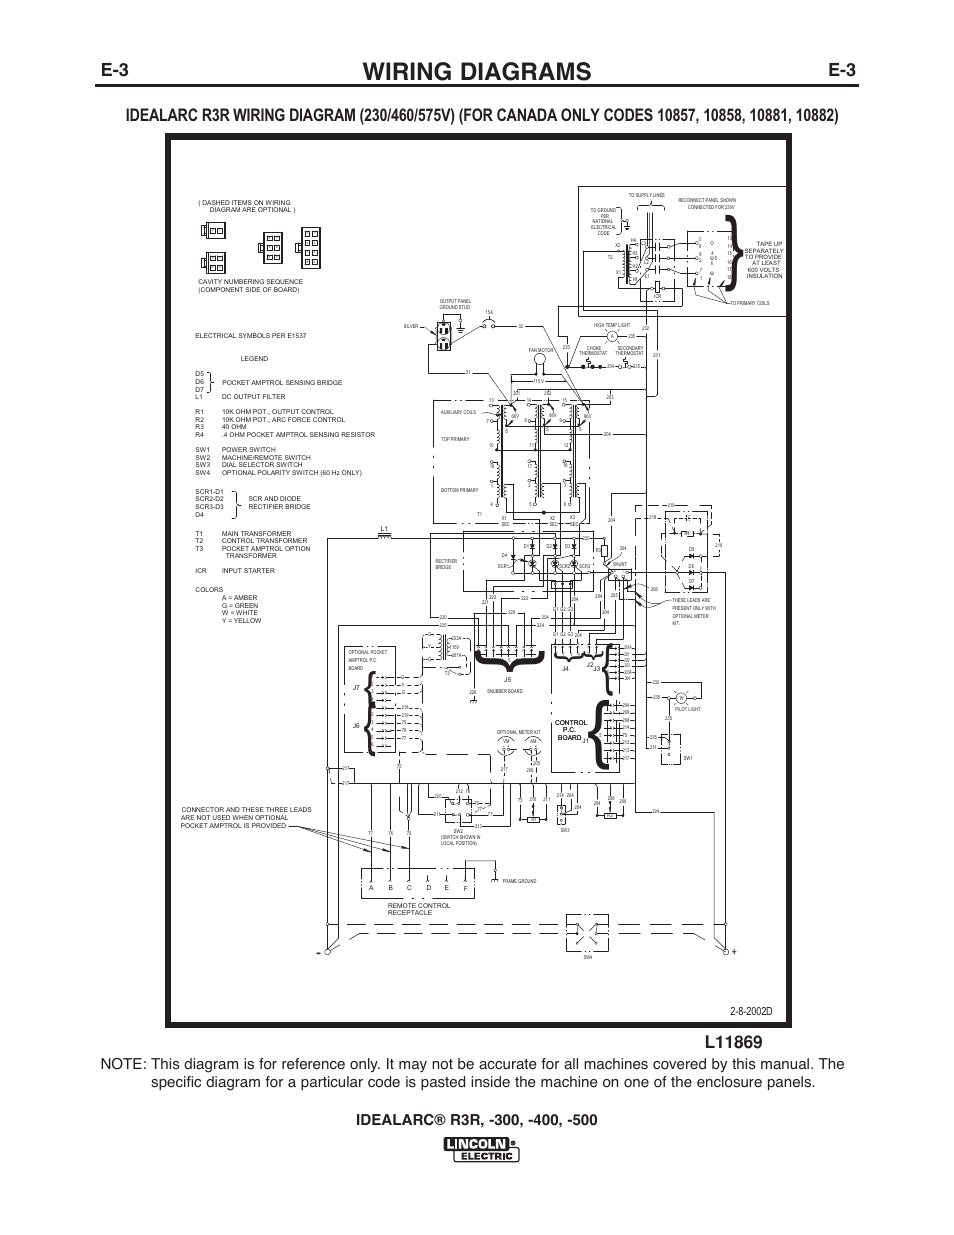 Wiring diagrams | Lincoln Electric IM409 IDEALARC R3R-400 ...